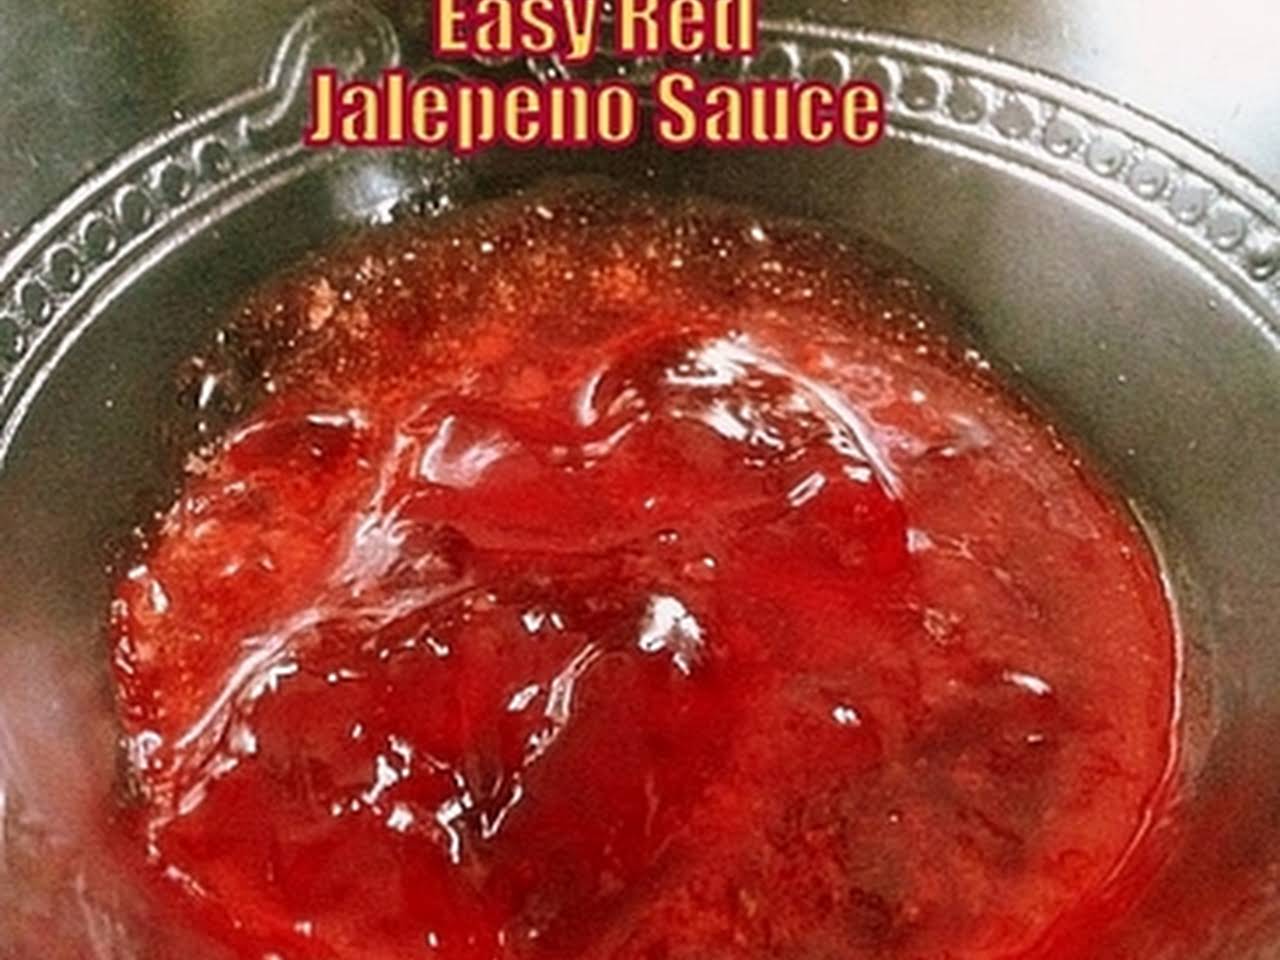 10 Best Jalapeno Sauce Steak Recipes | Yummly